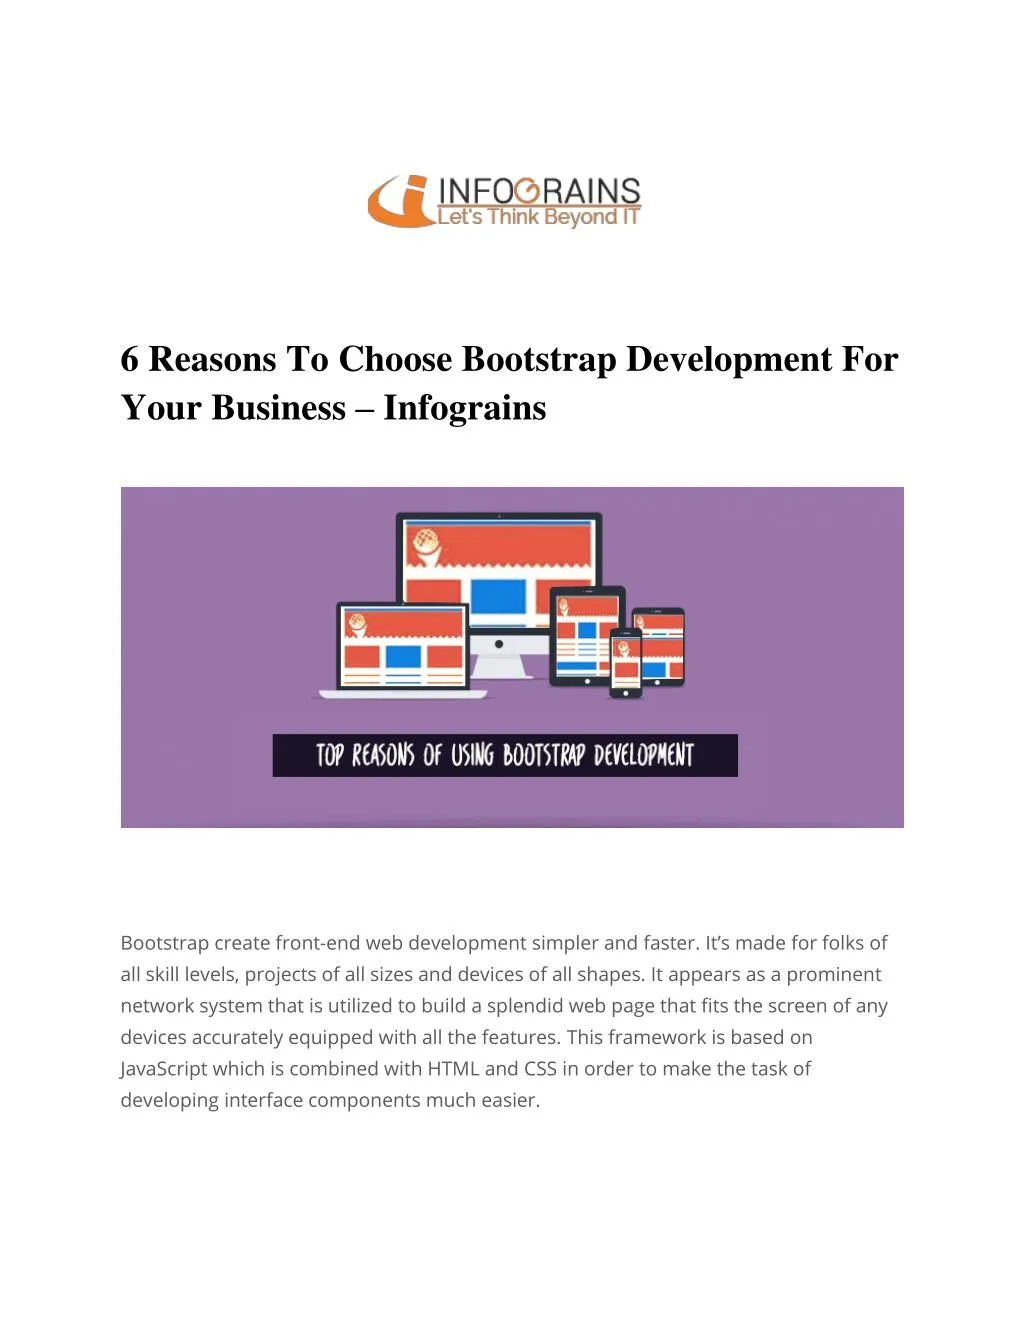 6 reasons to choose bootstrap development